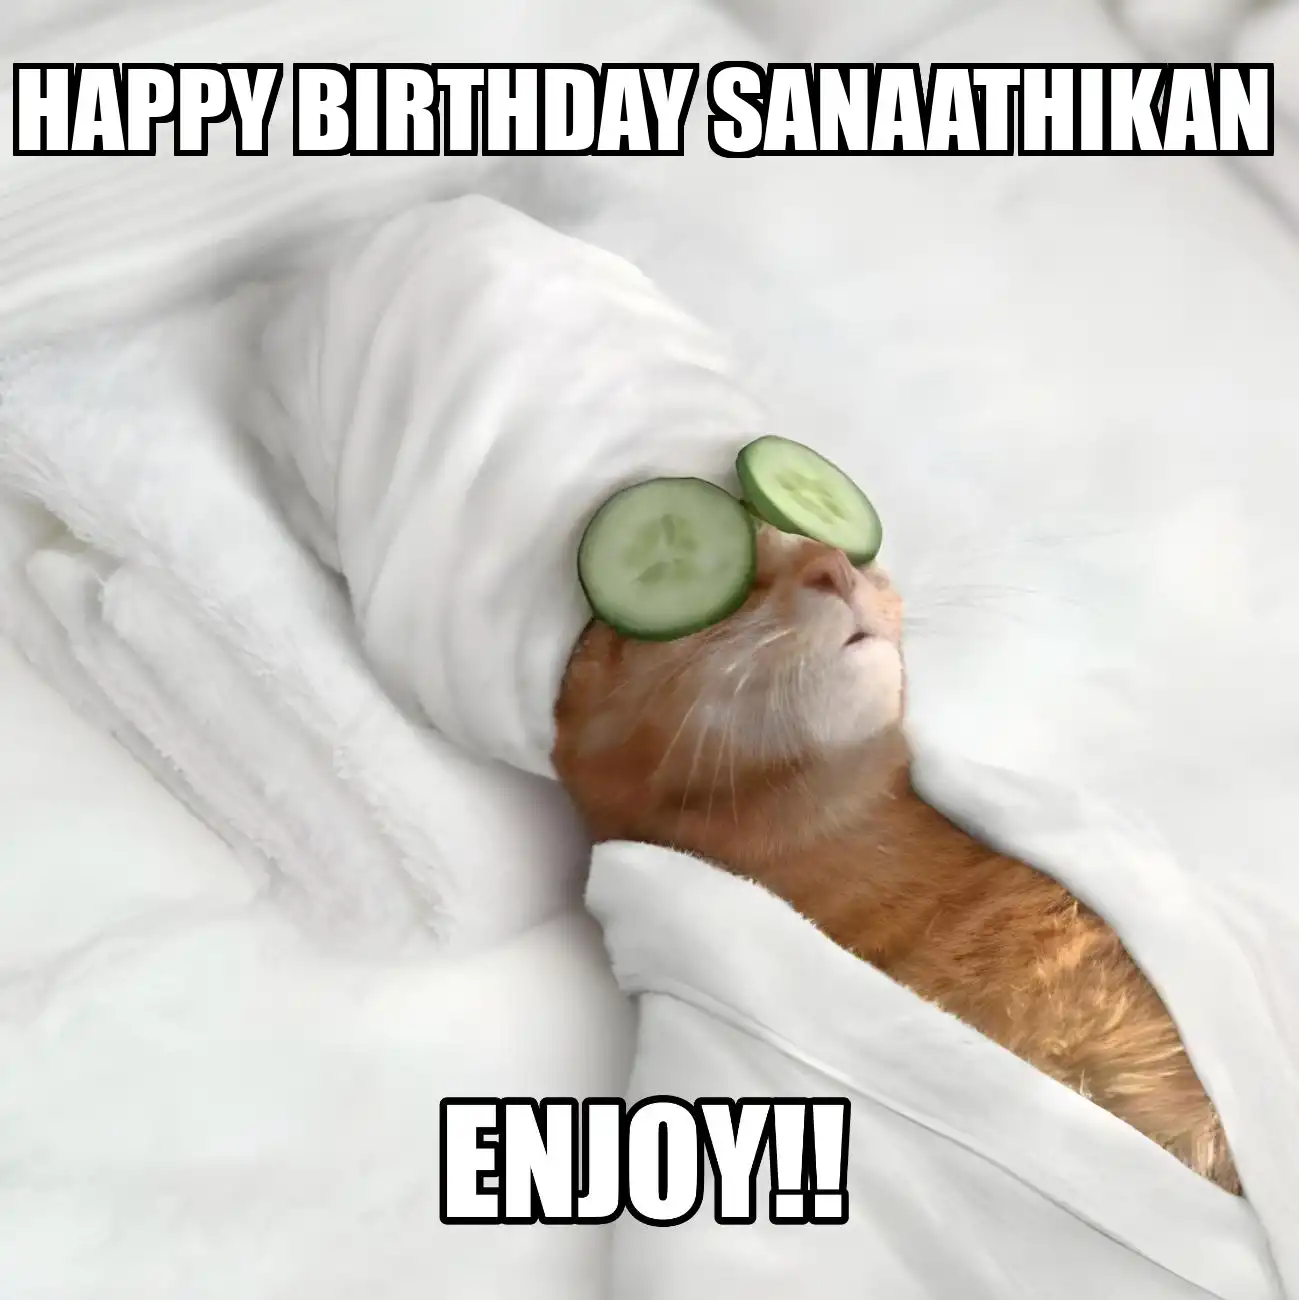 Happy Birthday Sanaathikan Enjoy Cat Meme